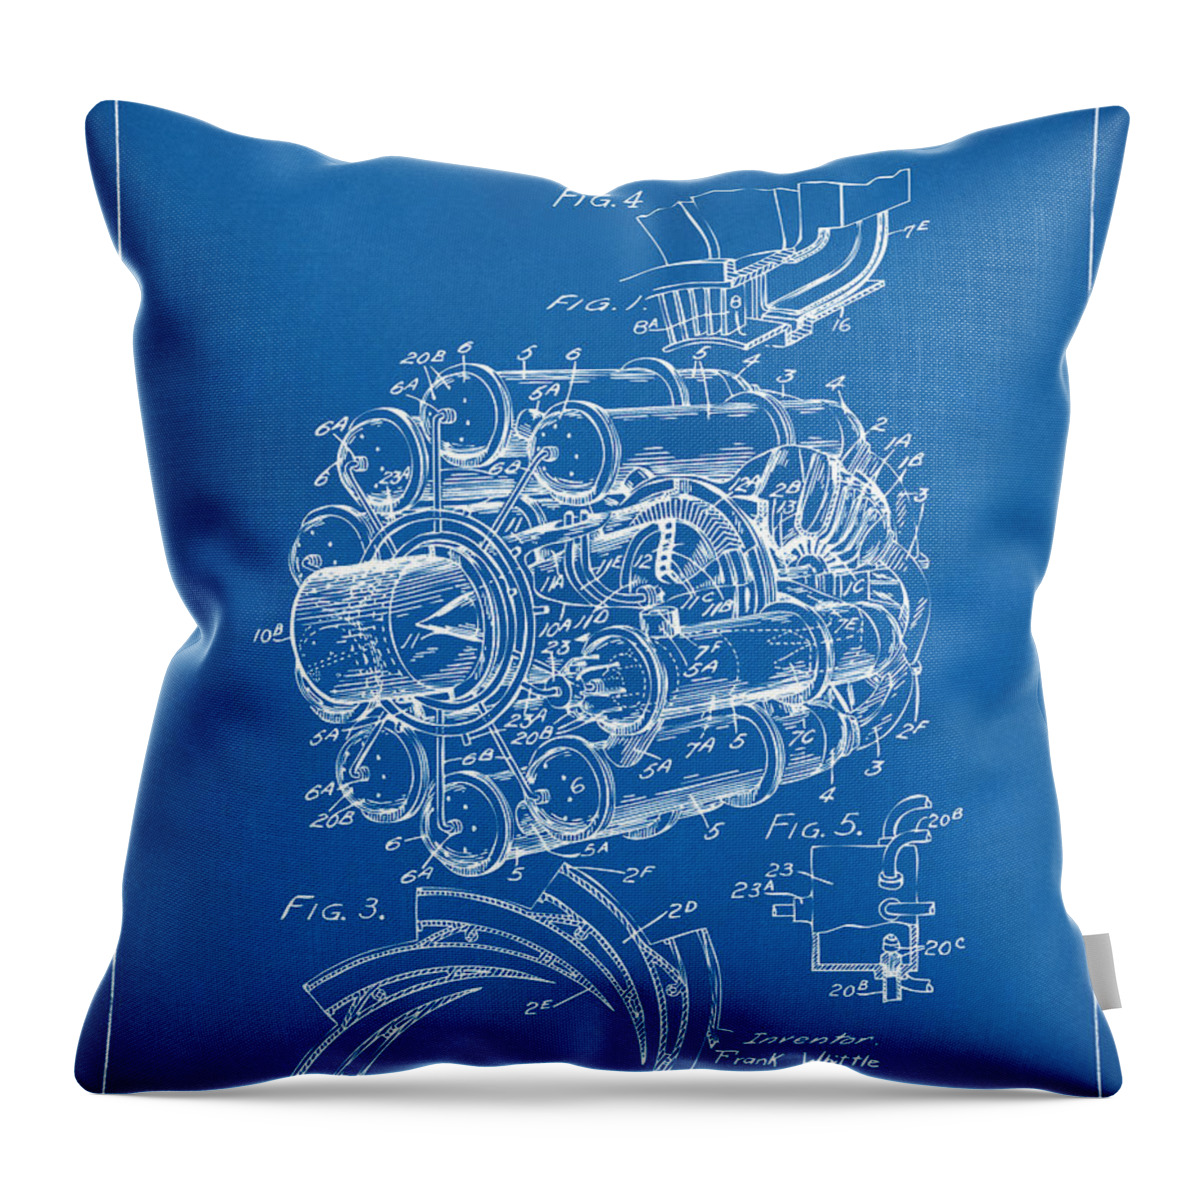 Jet Throw Pillow featuring the digital art 1946 Jet Aircraft Propulsion Patent Artwork - Blueprint by Nikki Marie Smith